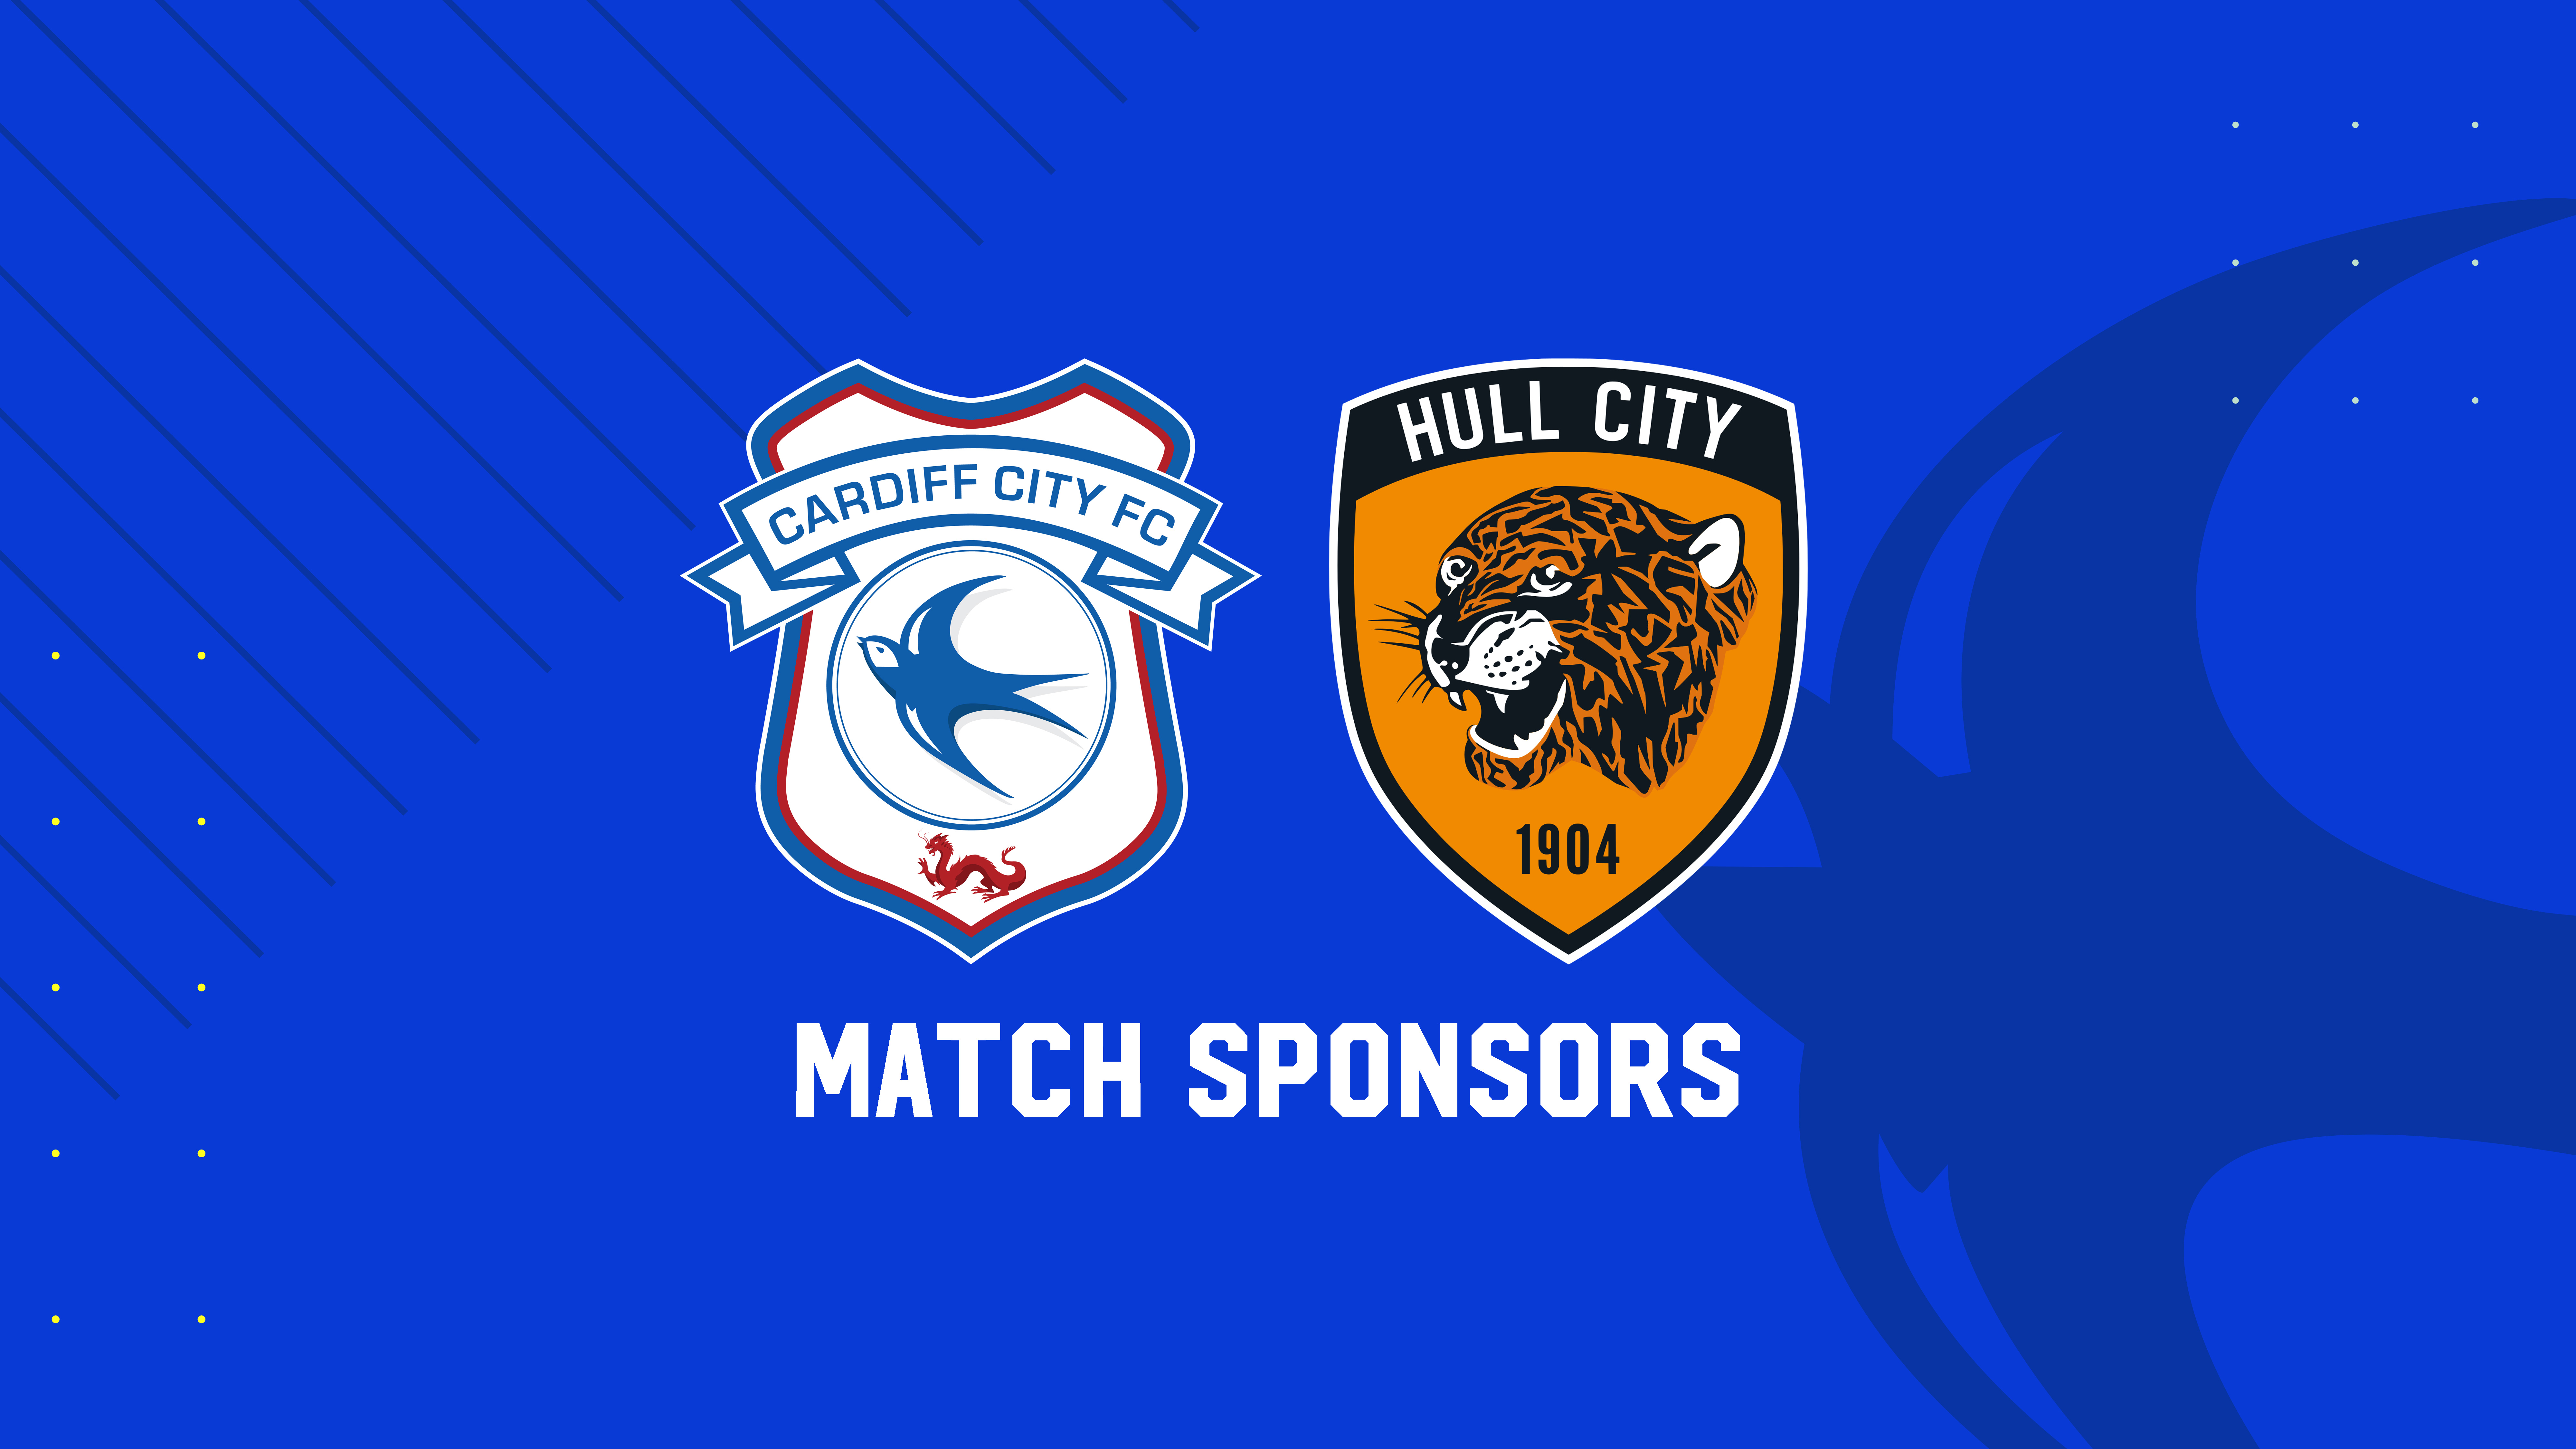 Match Sponsors: Cardiff City vs. Hull City